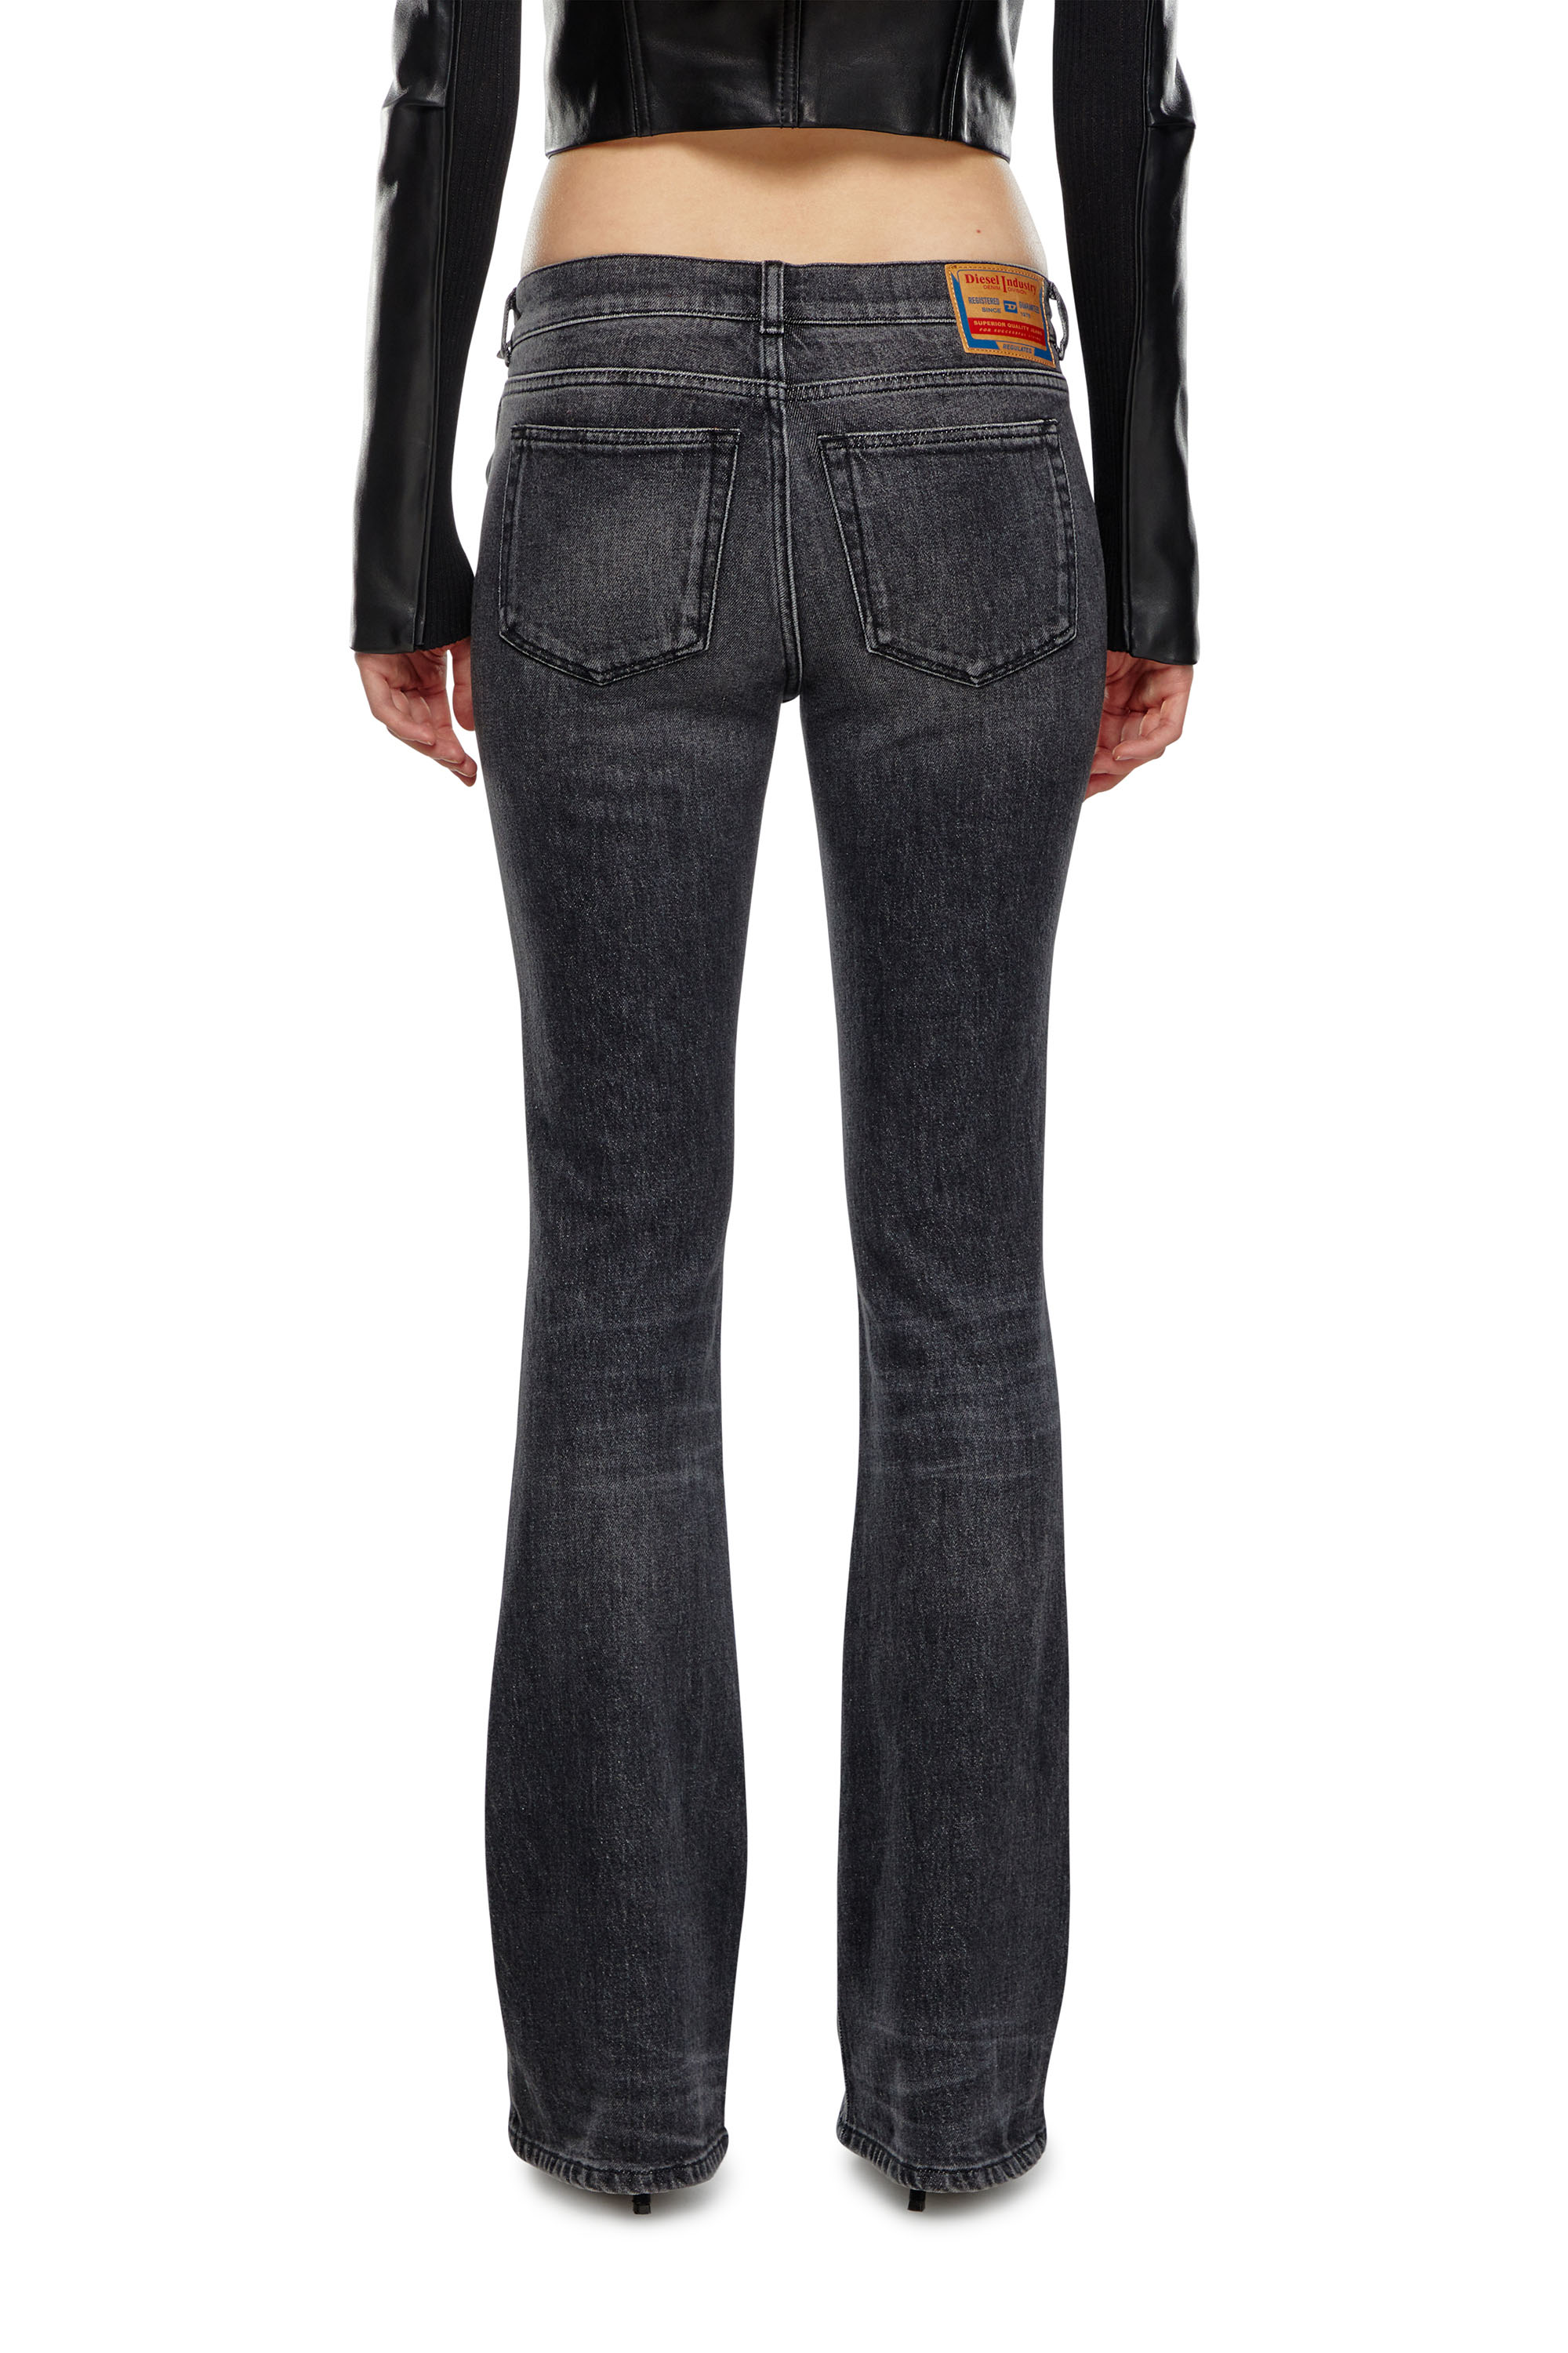 Solei Boot Cut Fit Jeans For Girls (30, Denim Blue), Bell Bottom